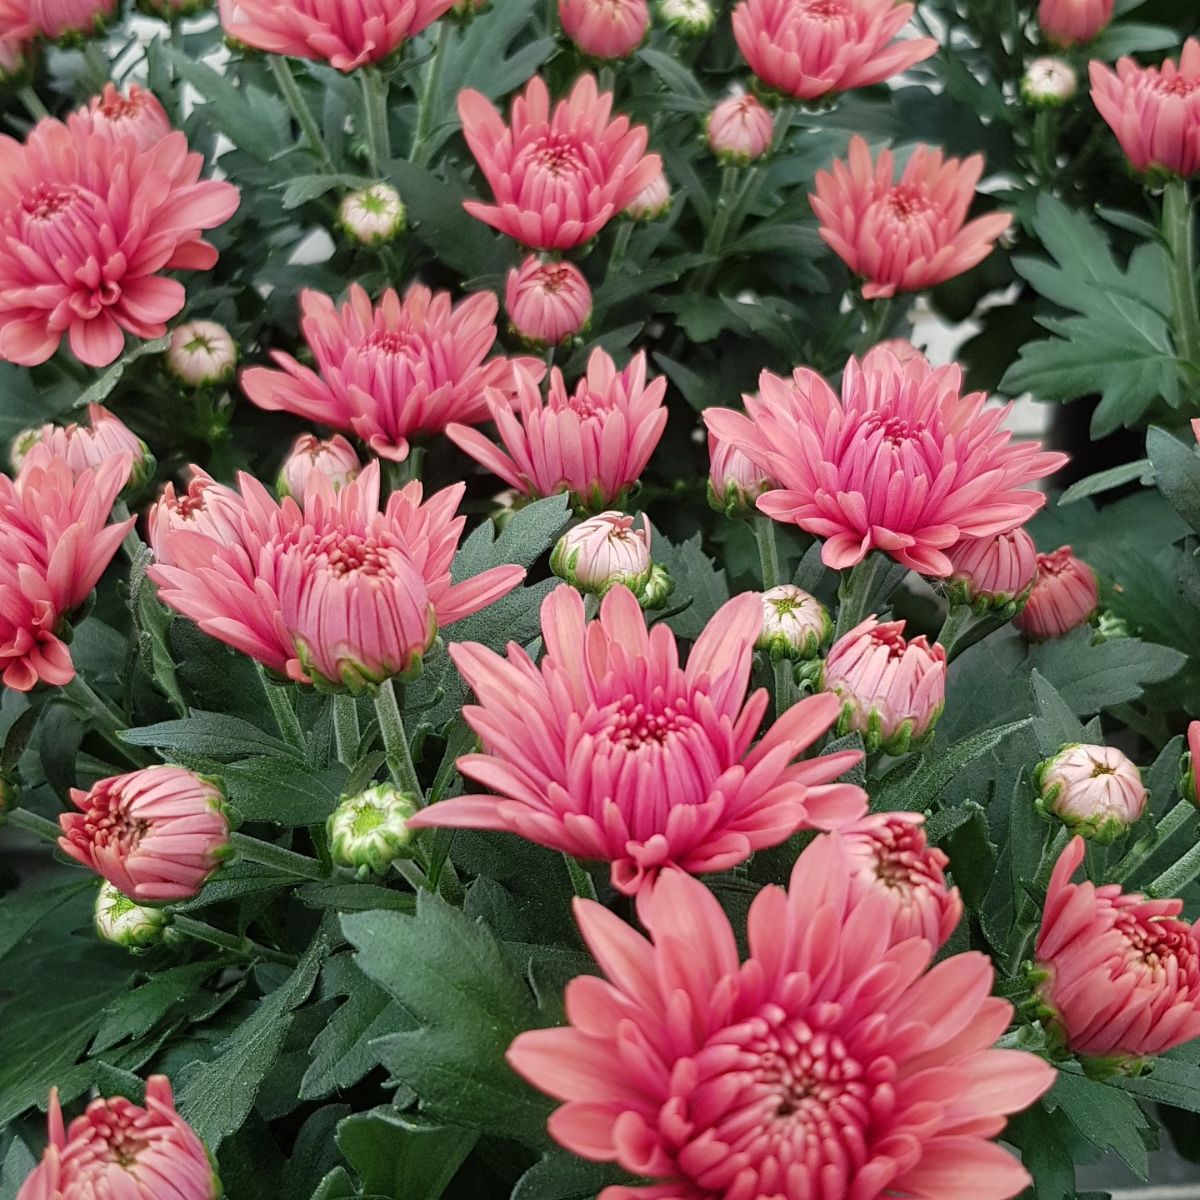 Pot Chrysanthemum Pink Featured on Thursd